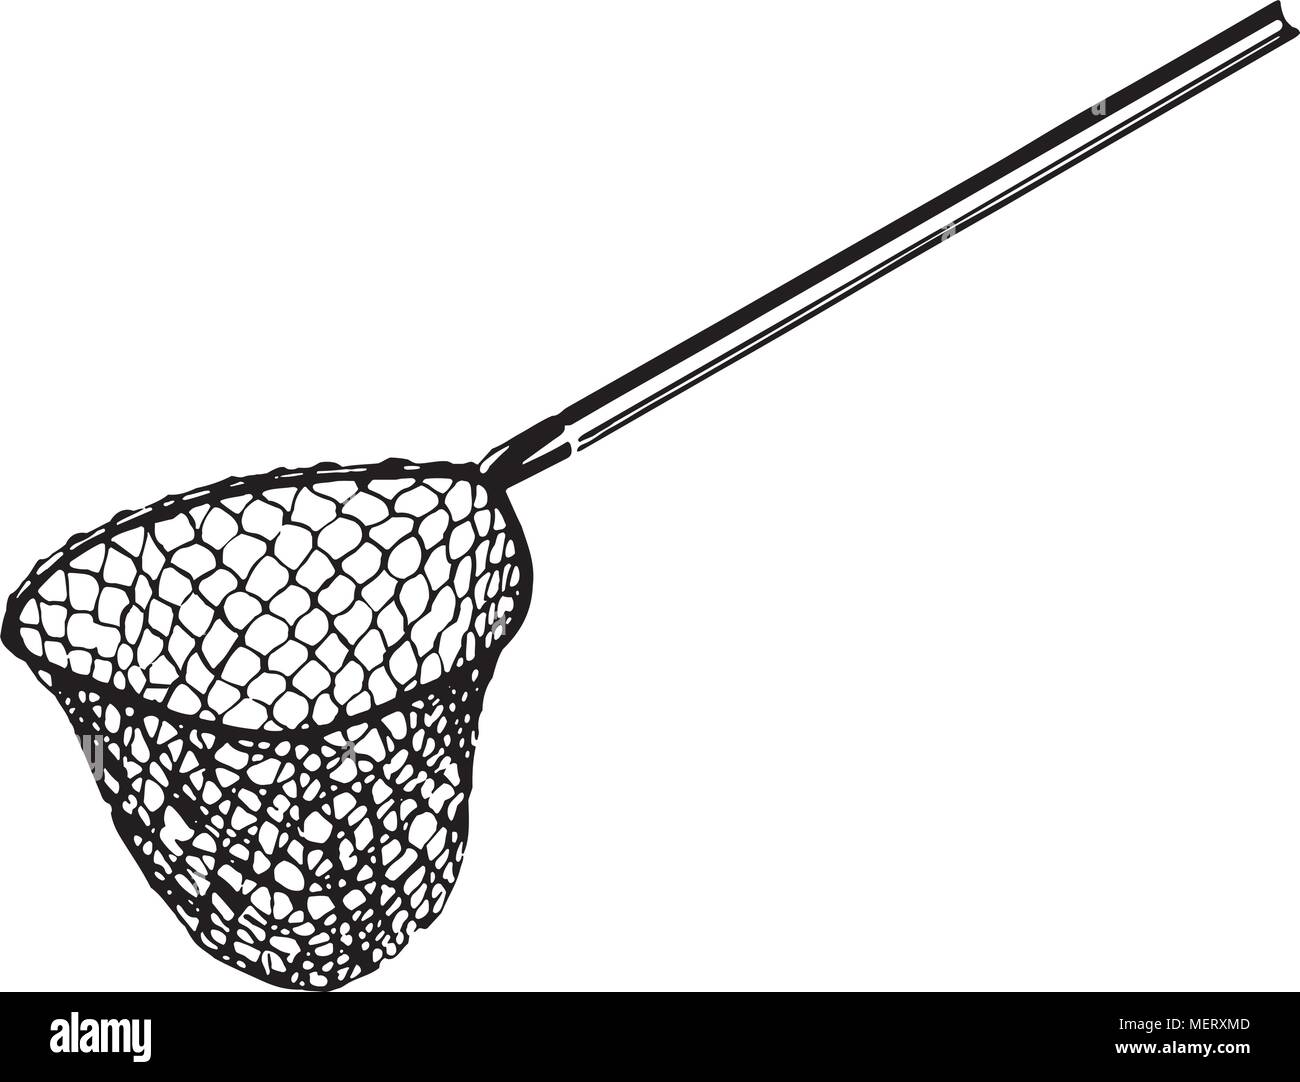 120+ Small Fishing Net Stock Illustrations, Royalty-Free Vector